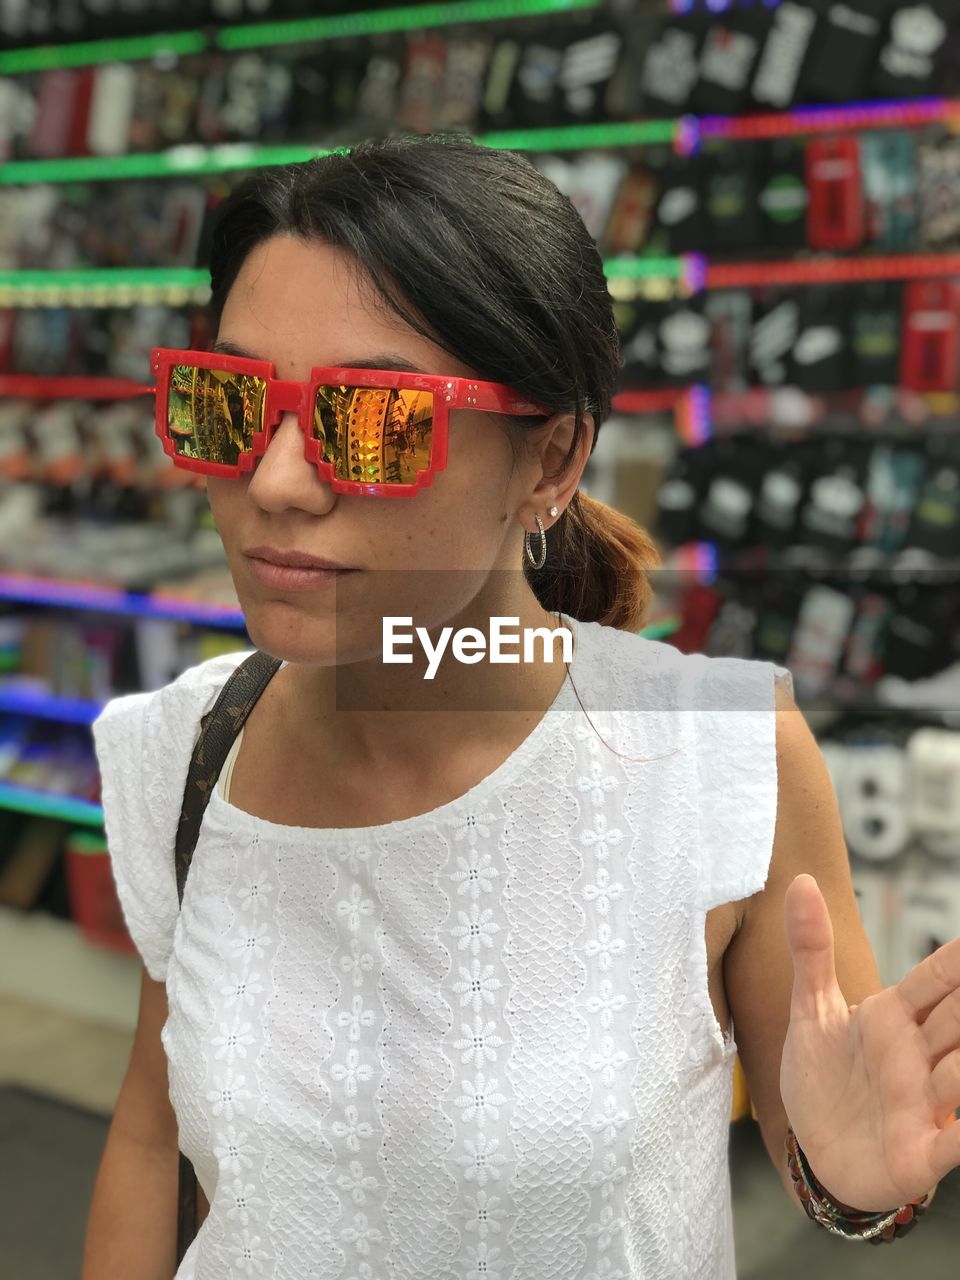 Woman wearing sunglasses at store